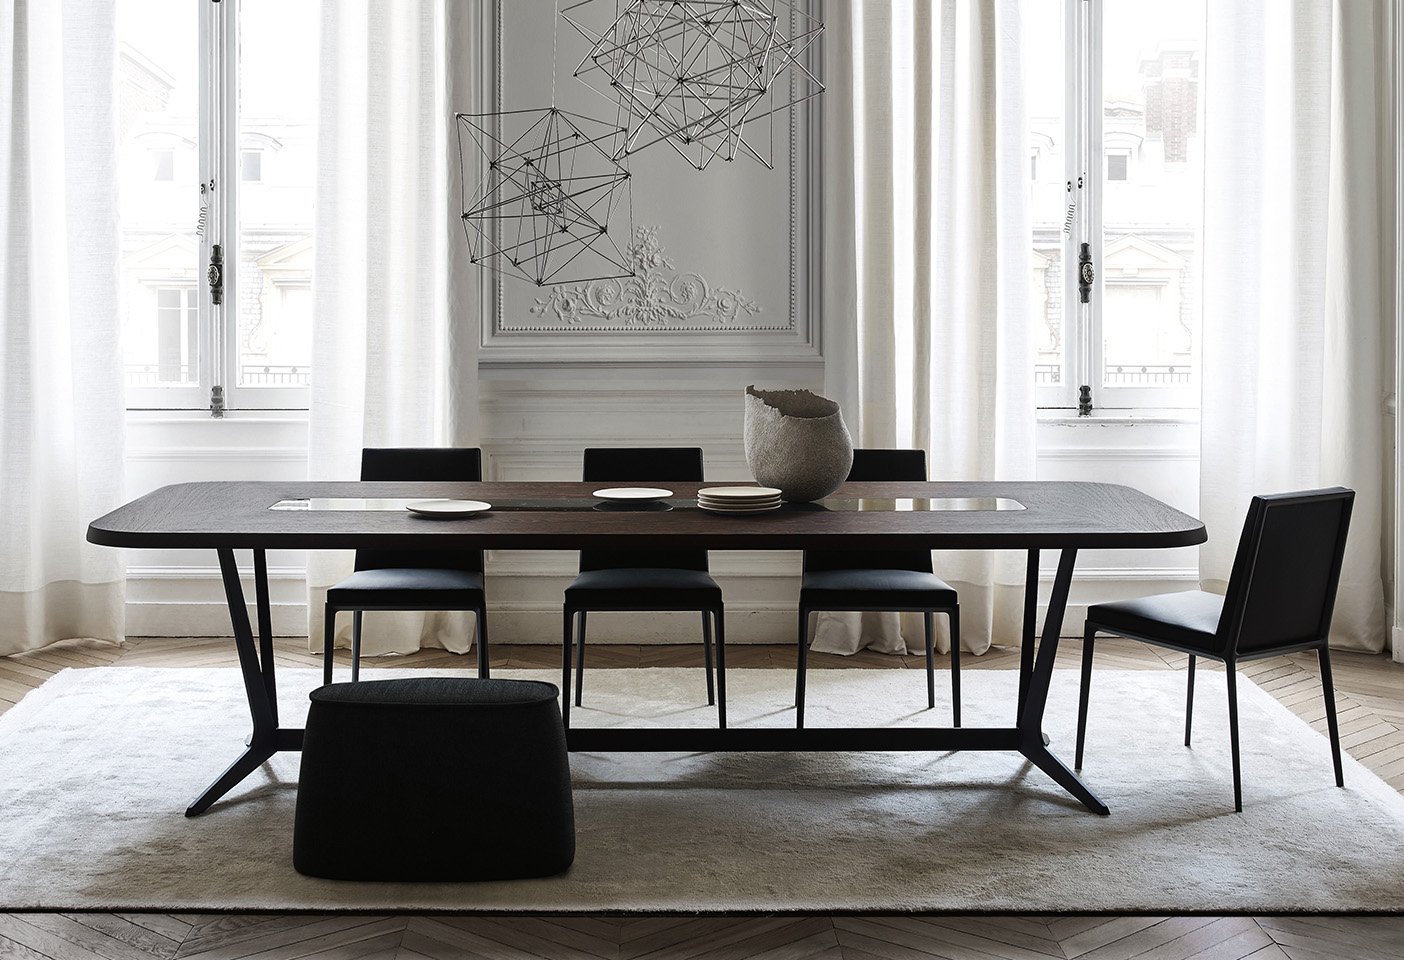 Astrum dining table with Caratos chairs designed by Antonio Citterio for Maxalto. Photo c/o Maxalto.